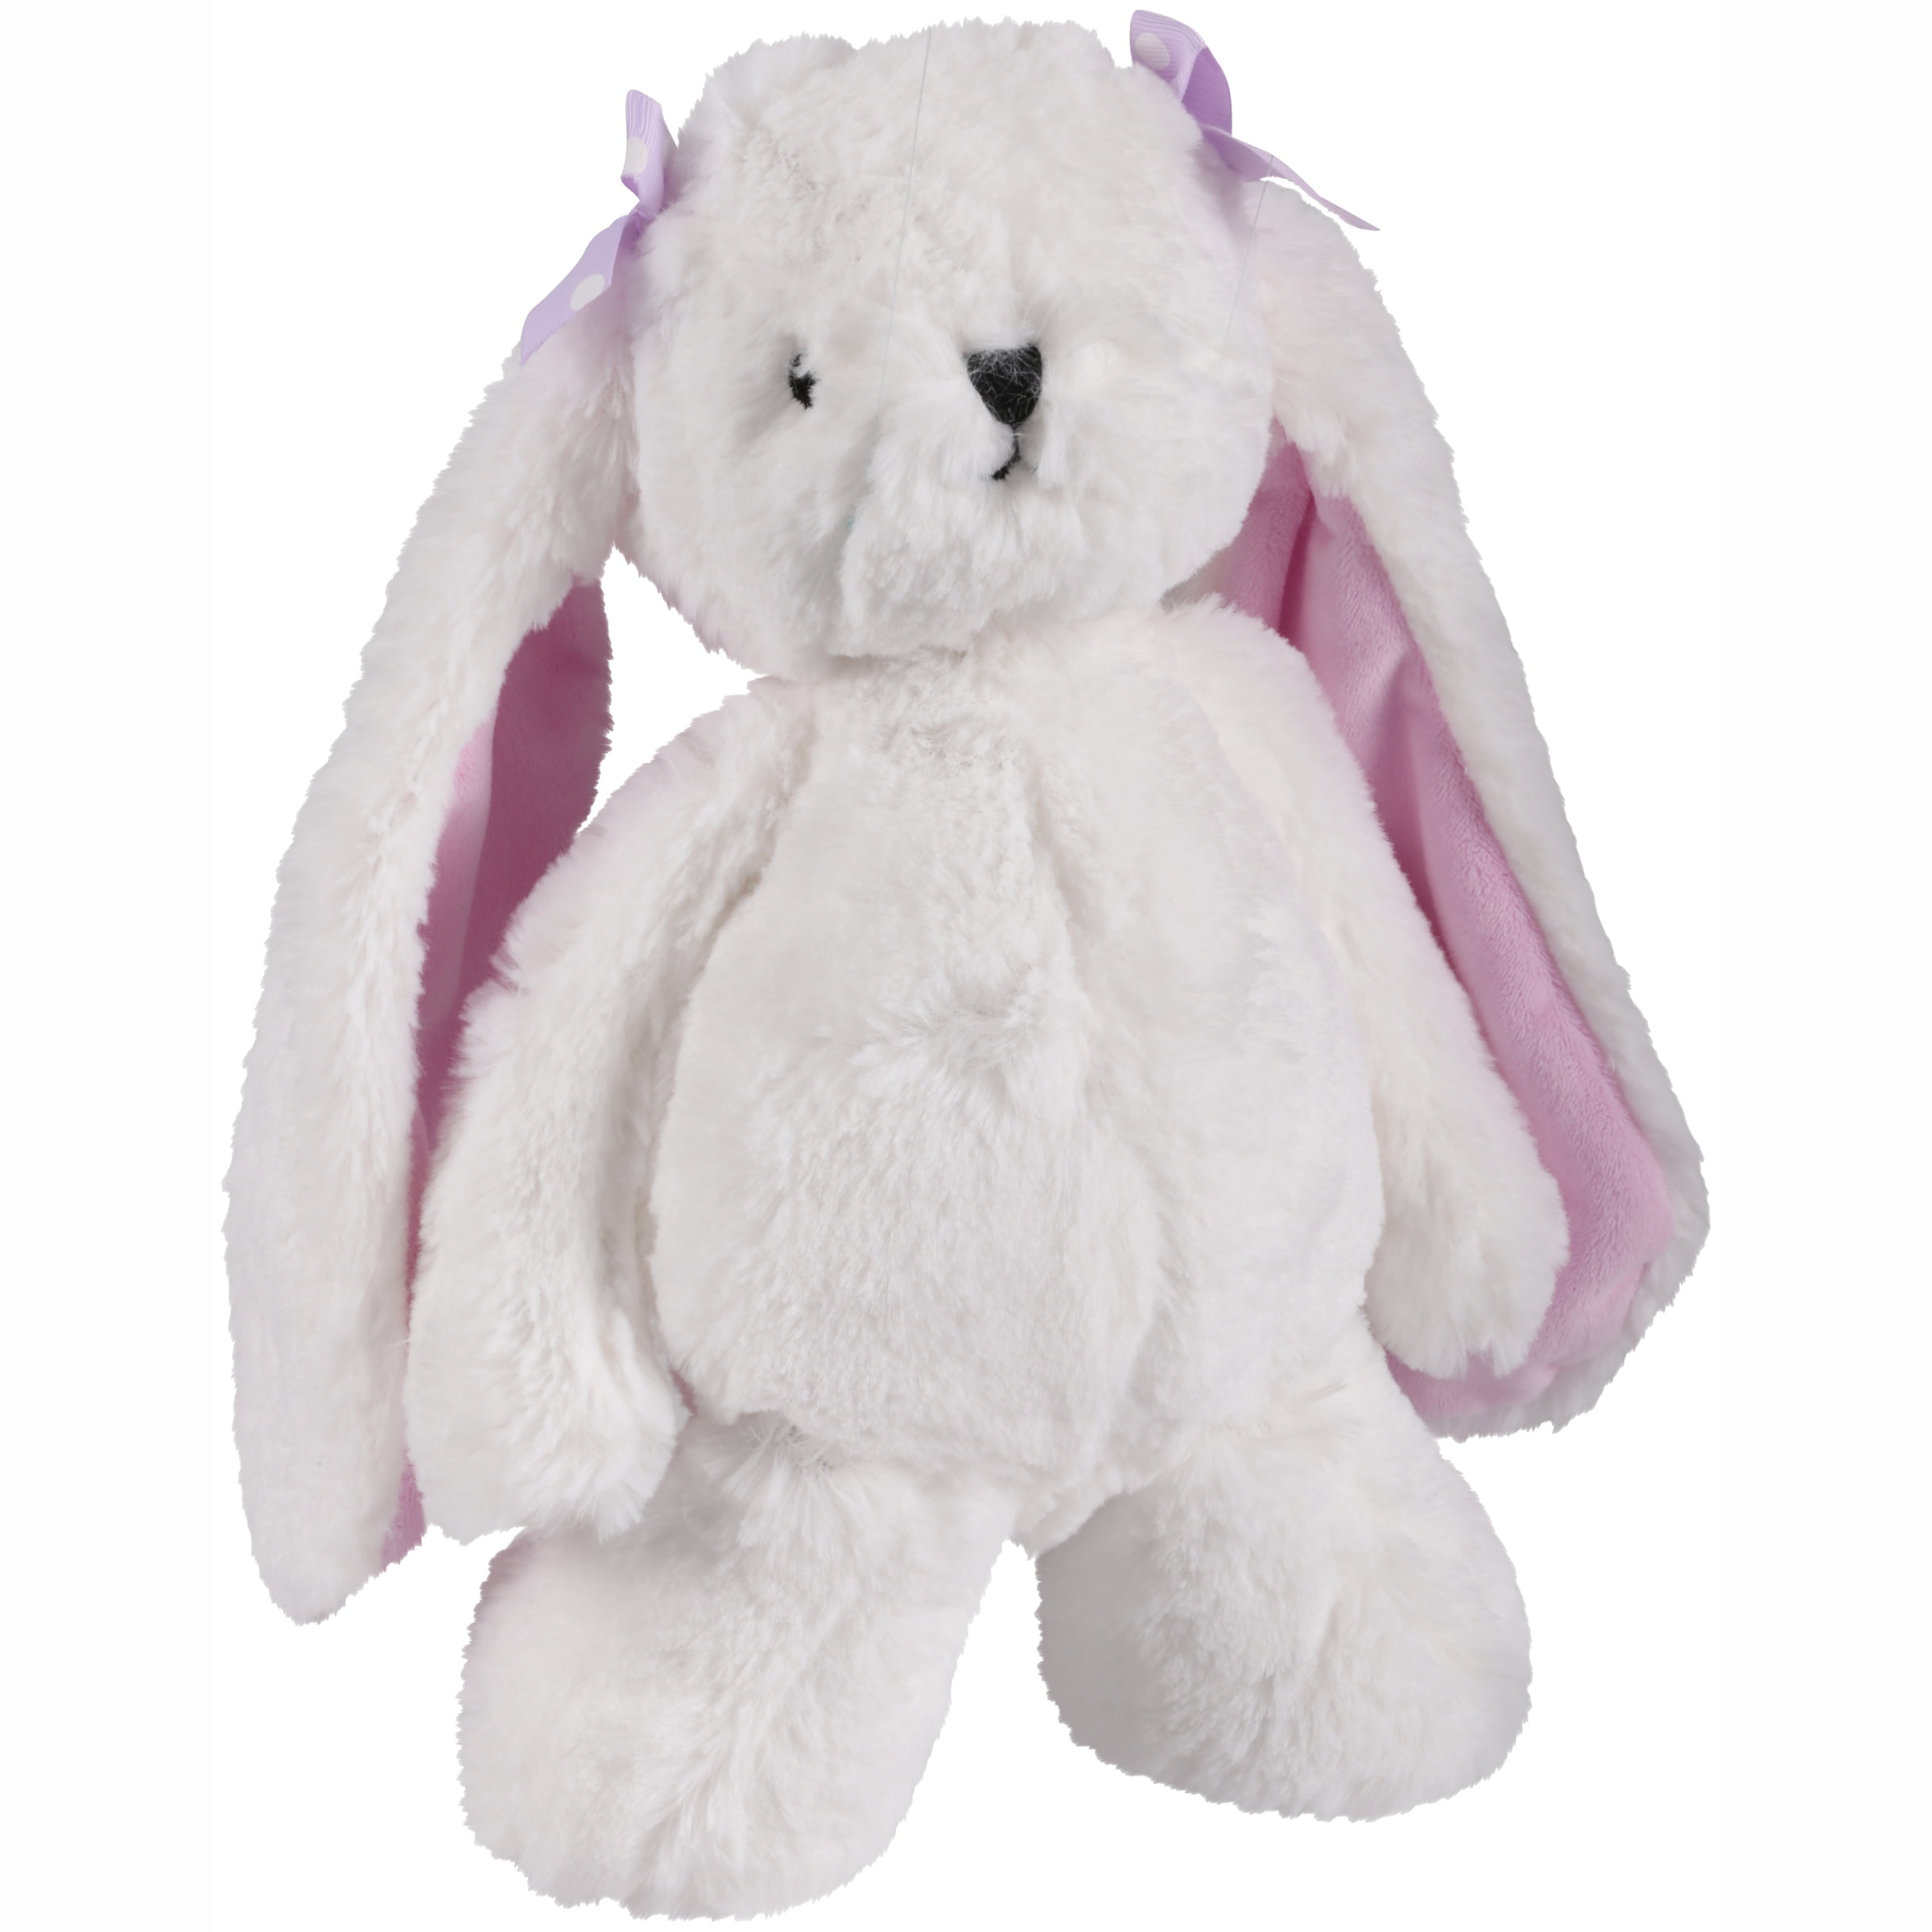 Bedtime Originals Wood Plush Bunny Sasha Lavender Ship for sale online 